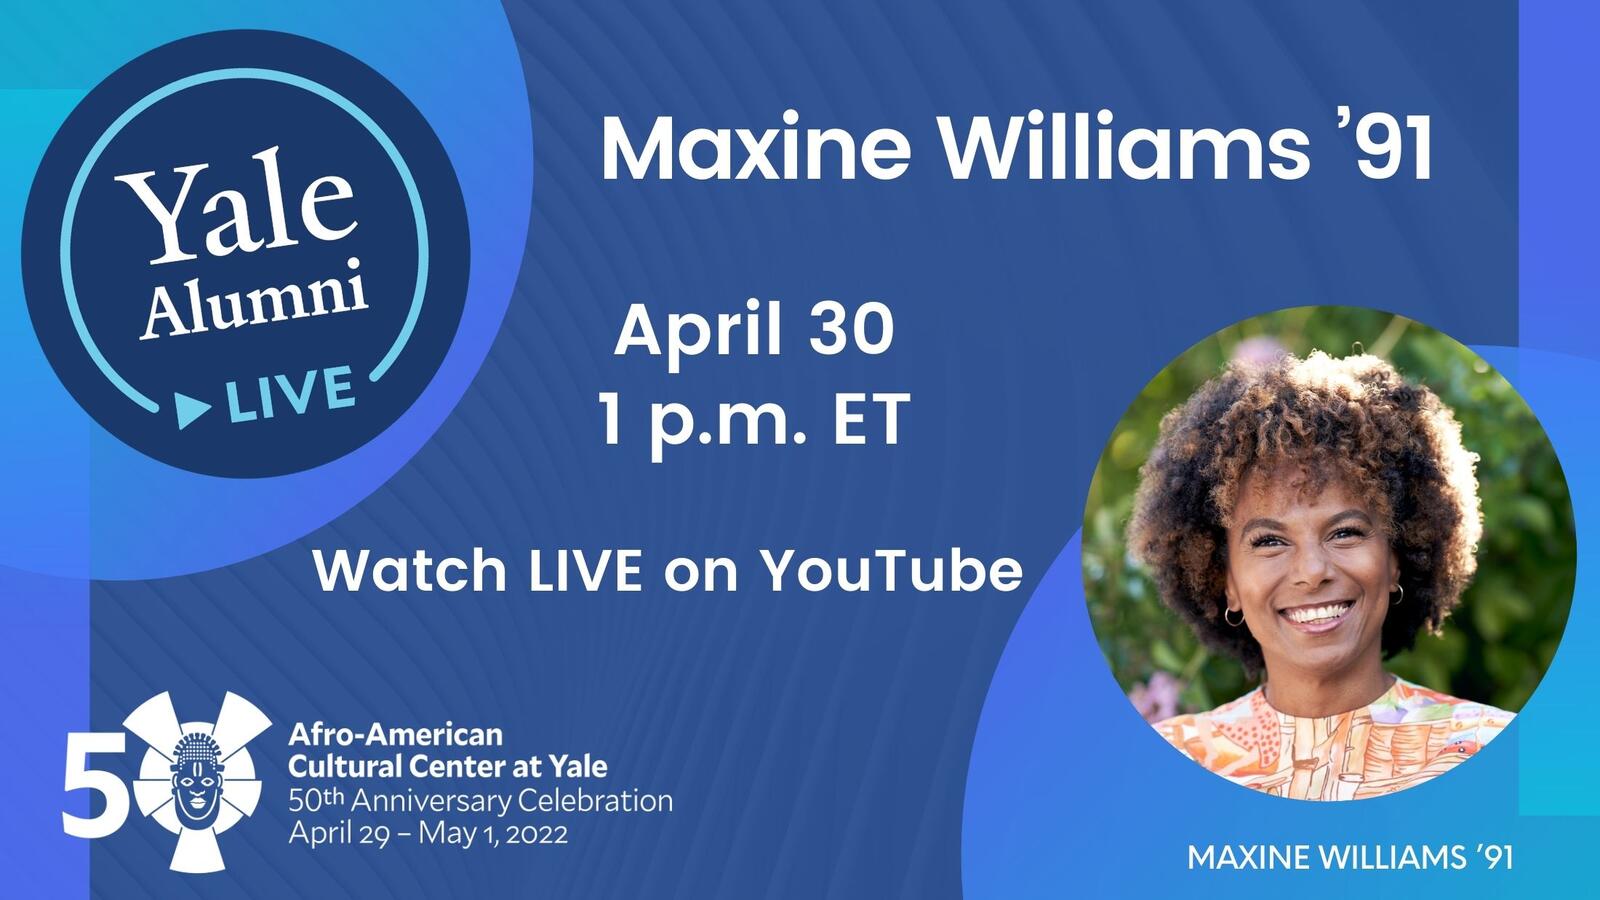 Graphic: Yale Alumni LIVE: Maxine Williams '91 